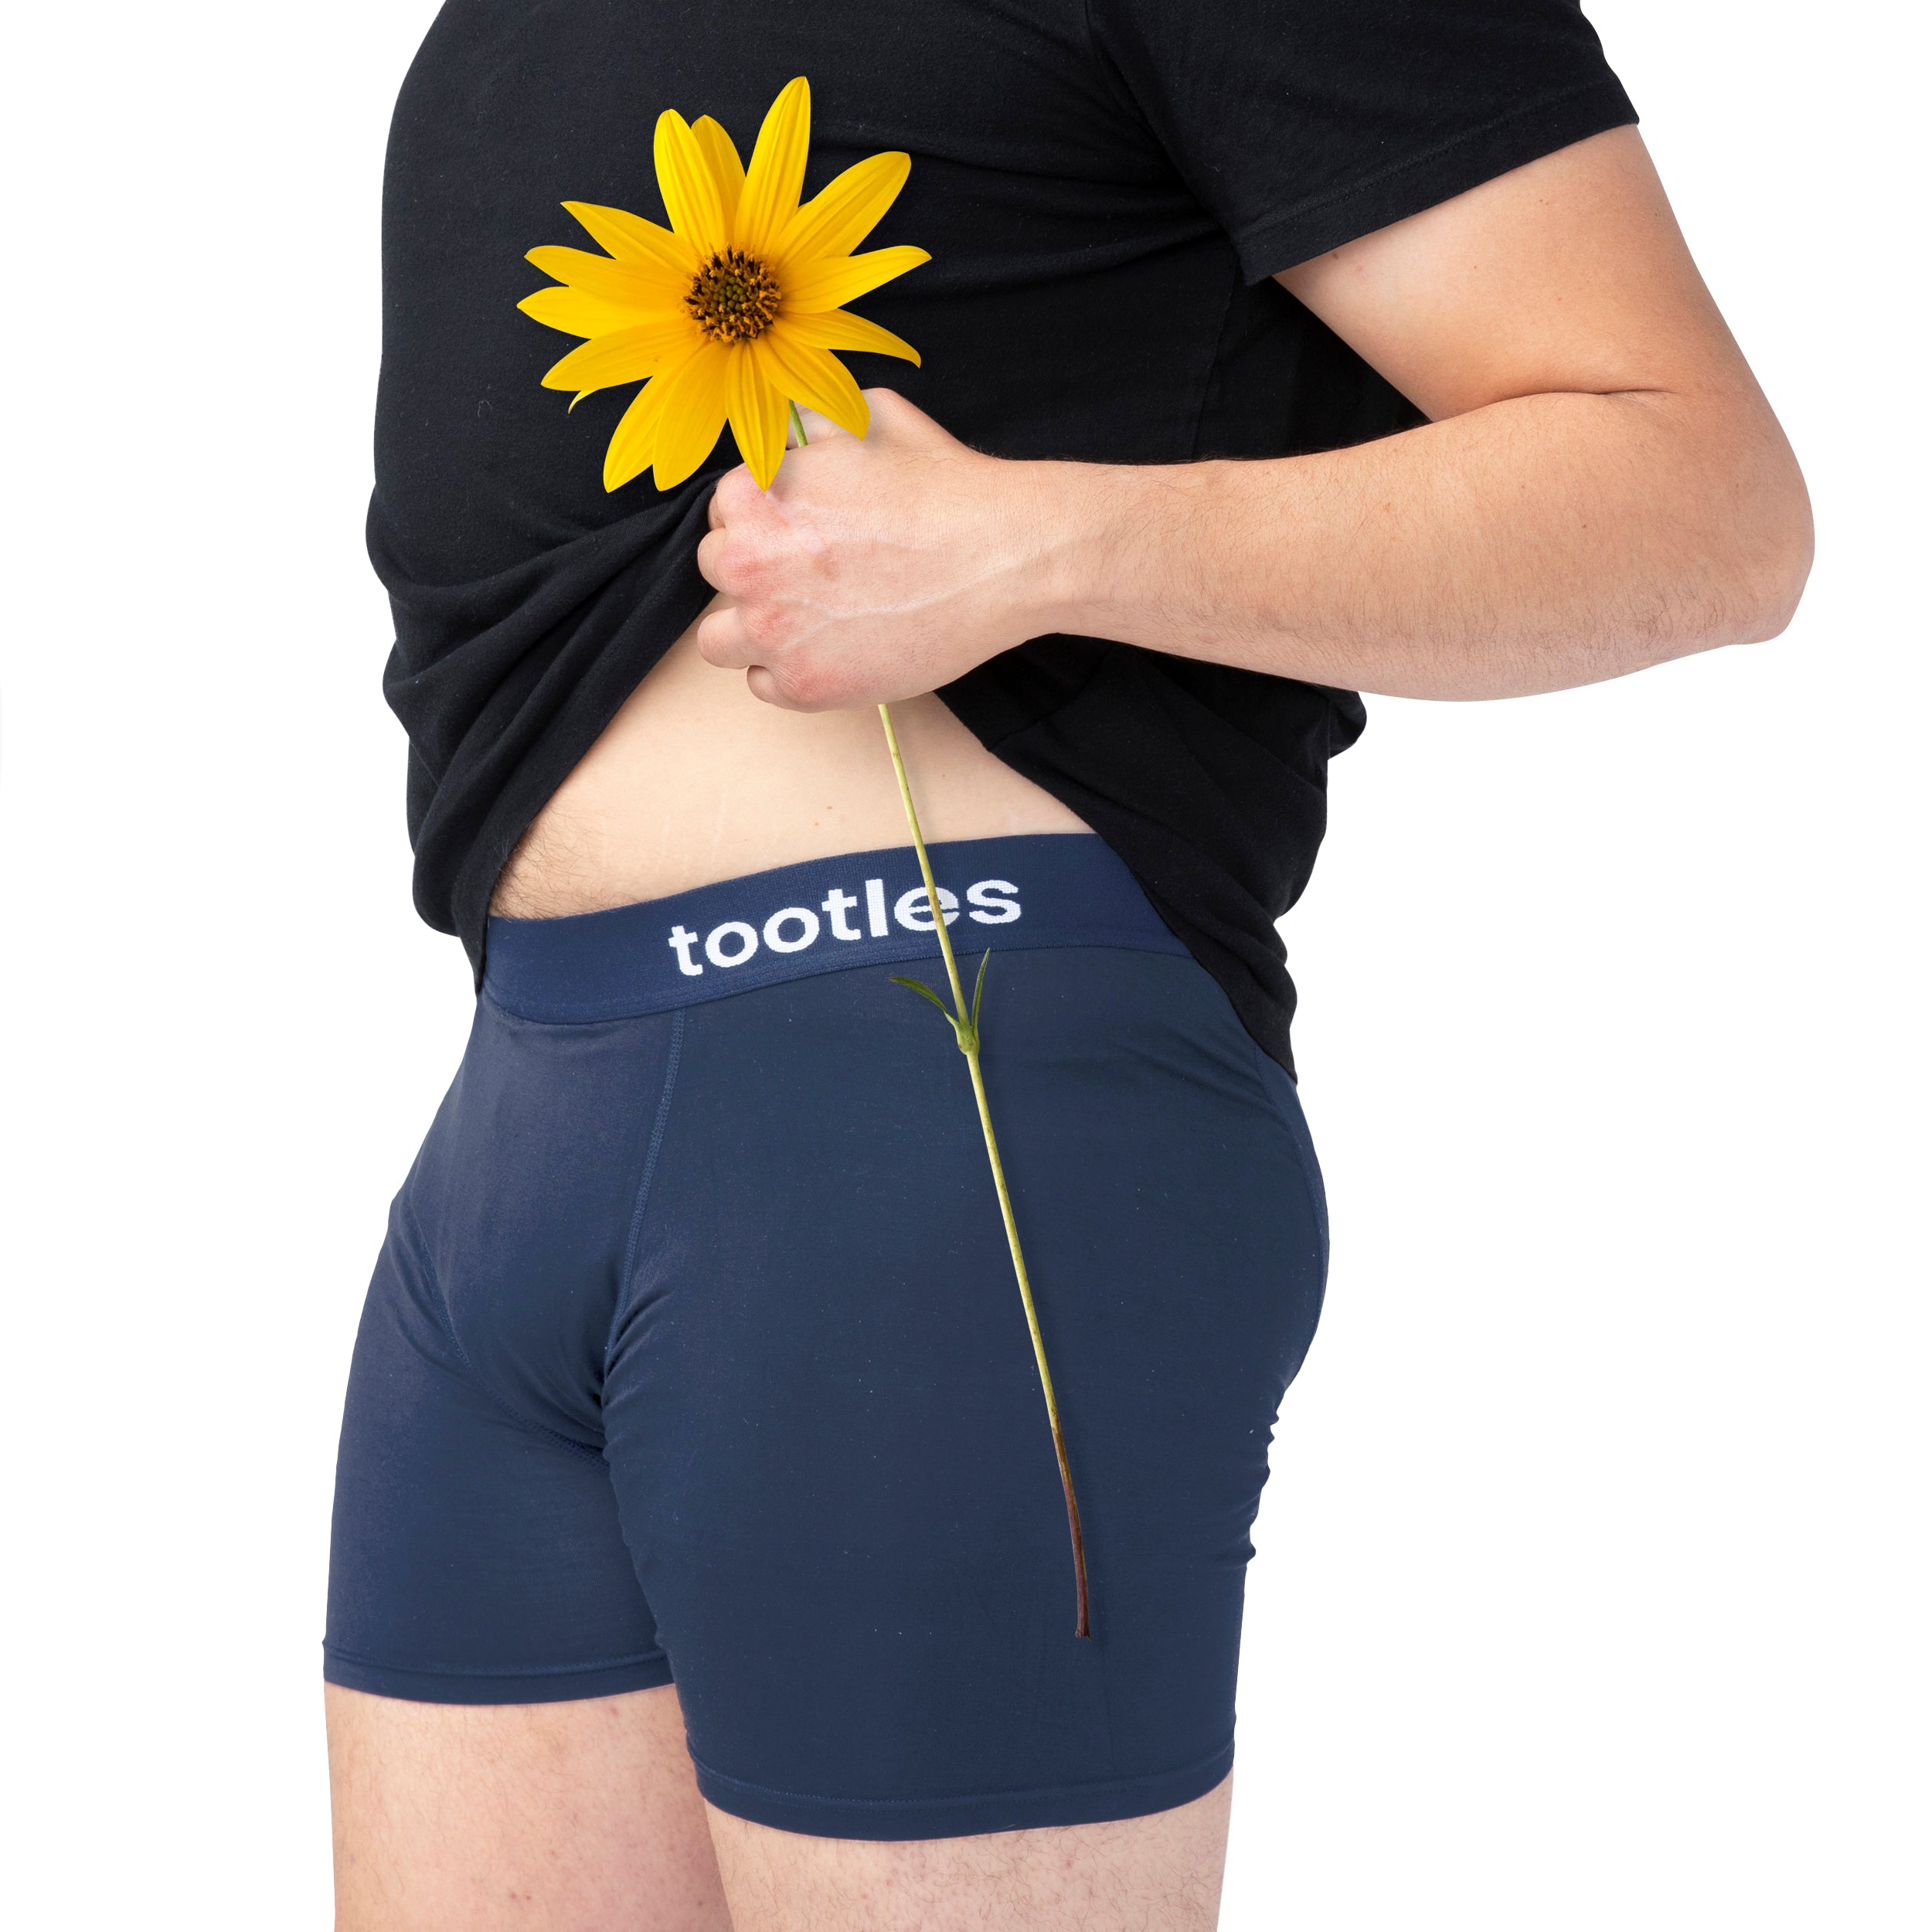 Comprar Fart Filtering Underwear by TOOTLES - Mens Boxer Briefs